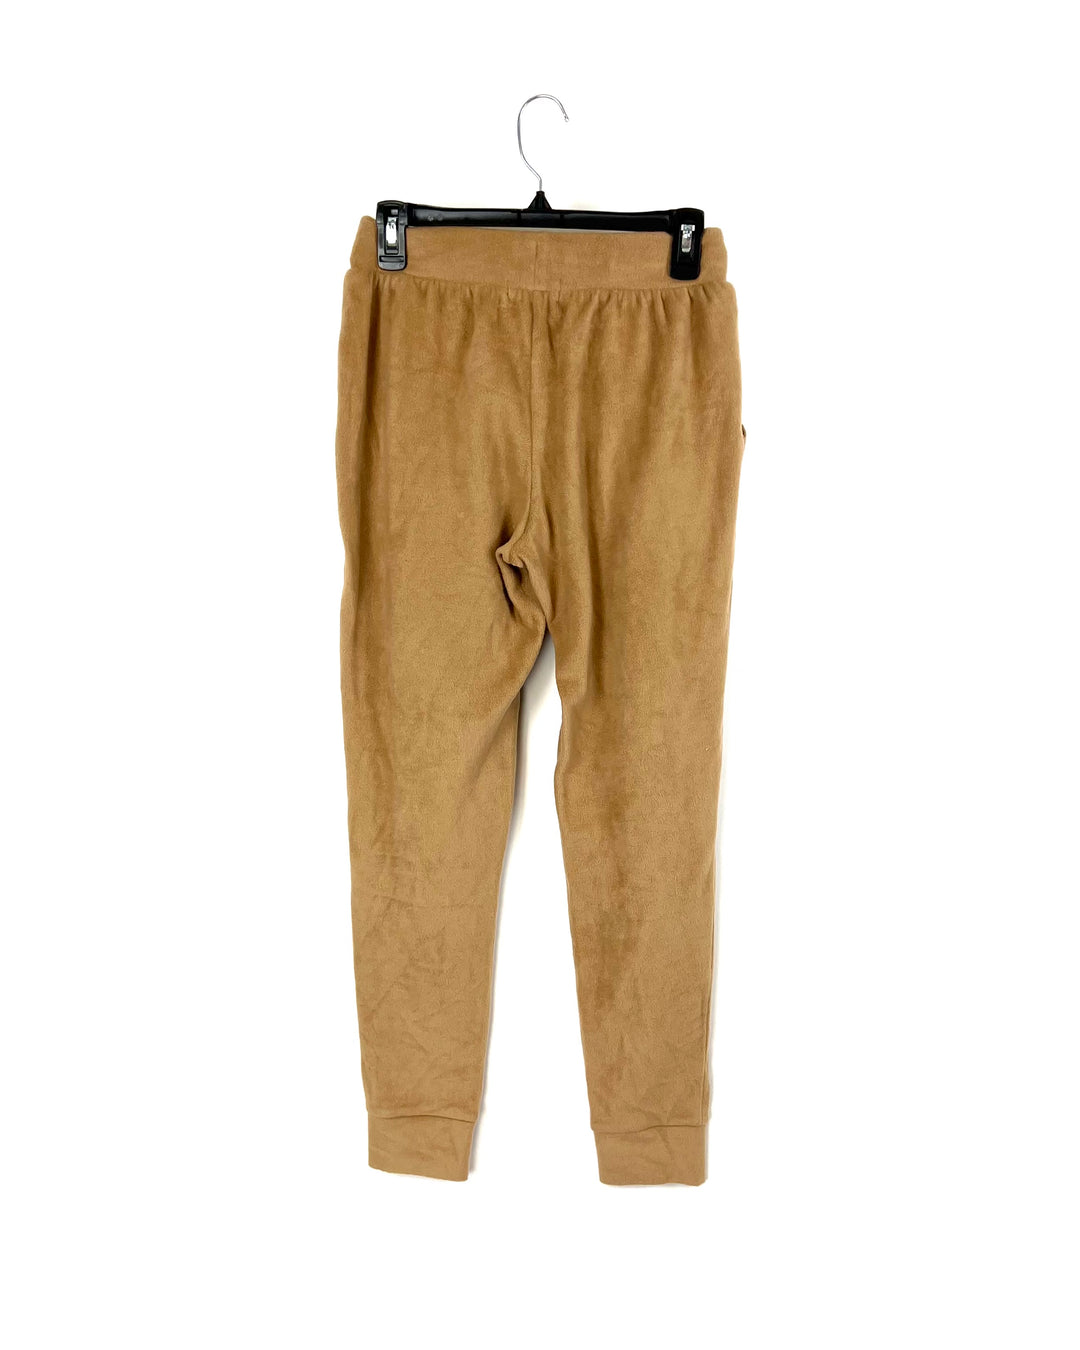 Brown Fleece Sweatpants - Small